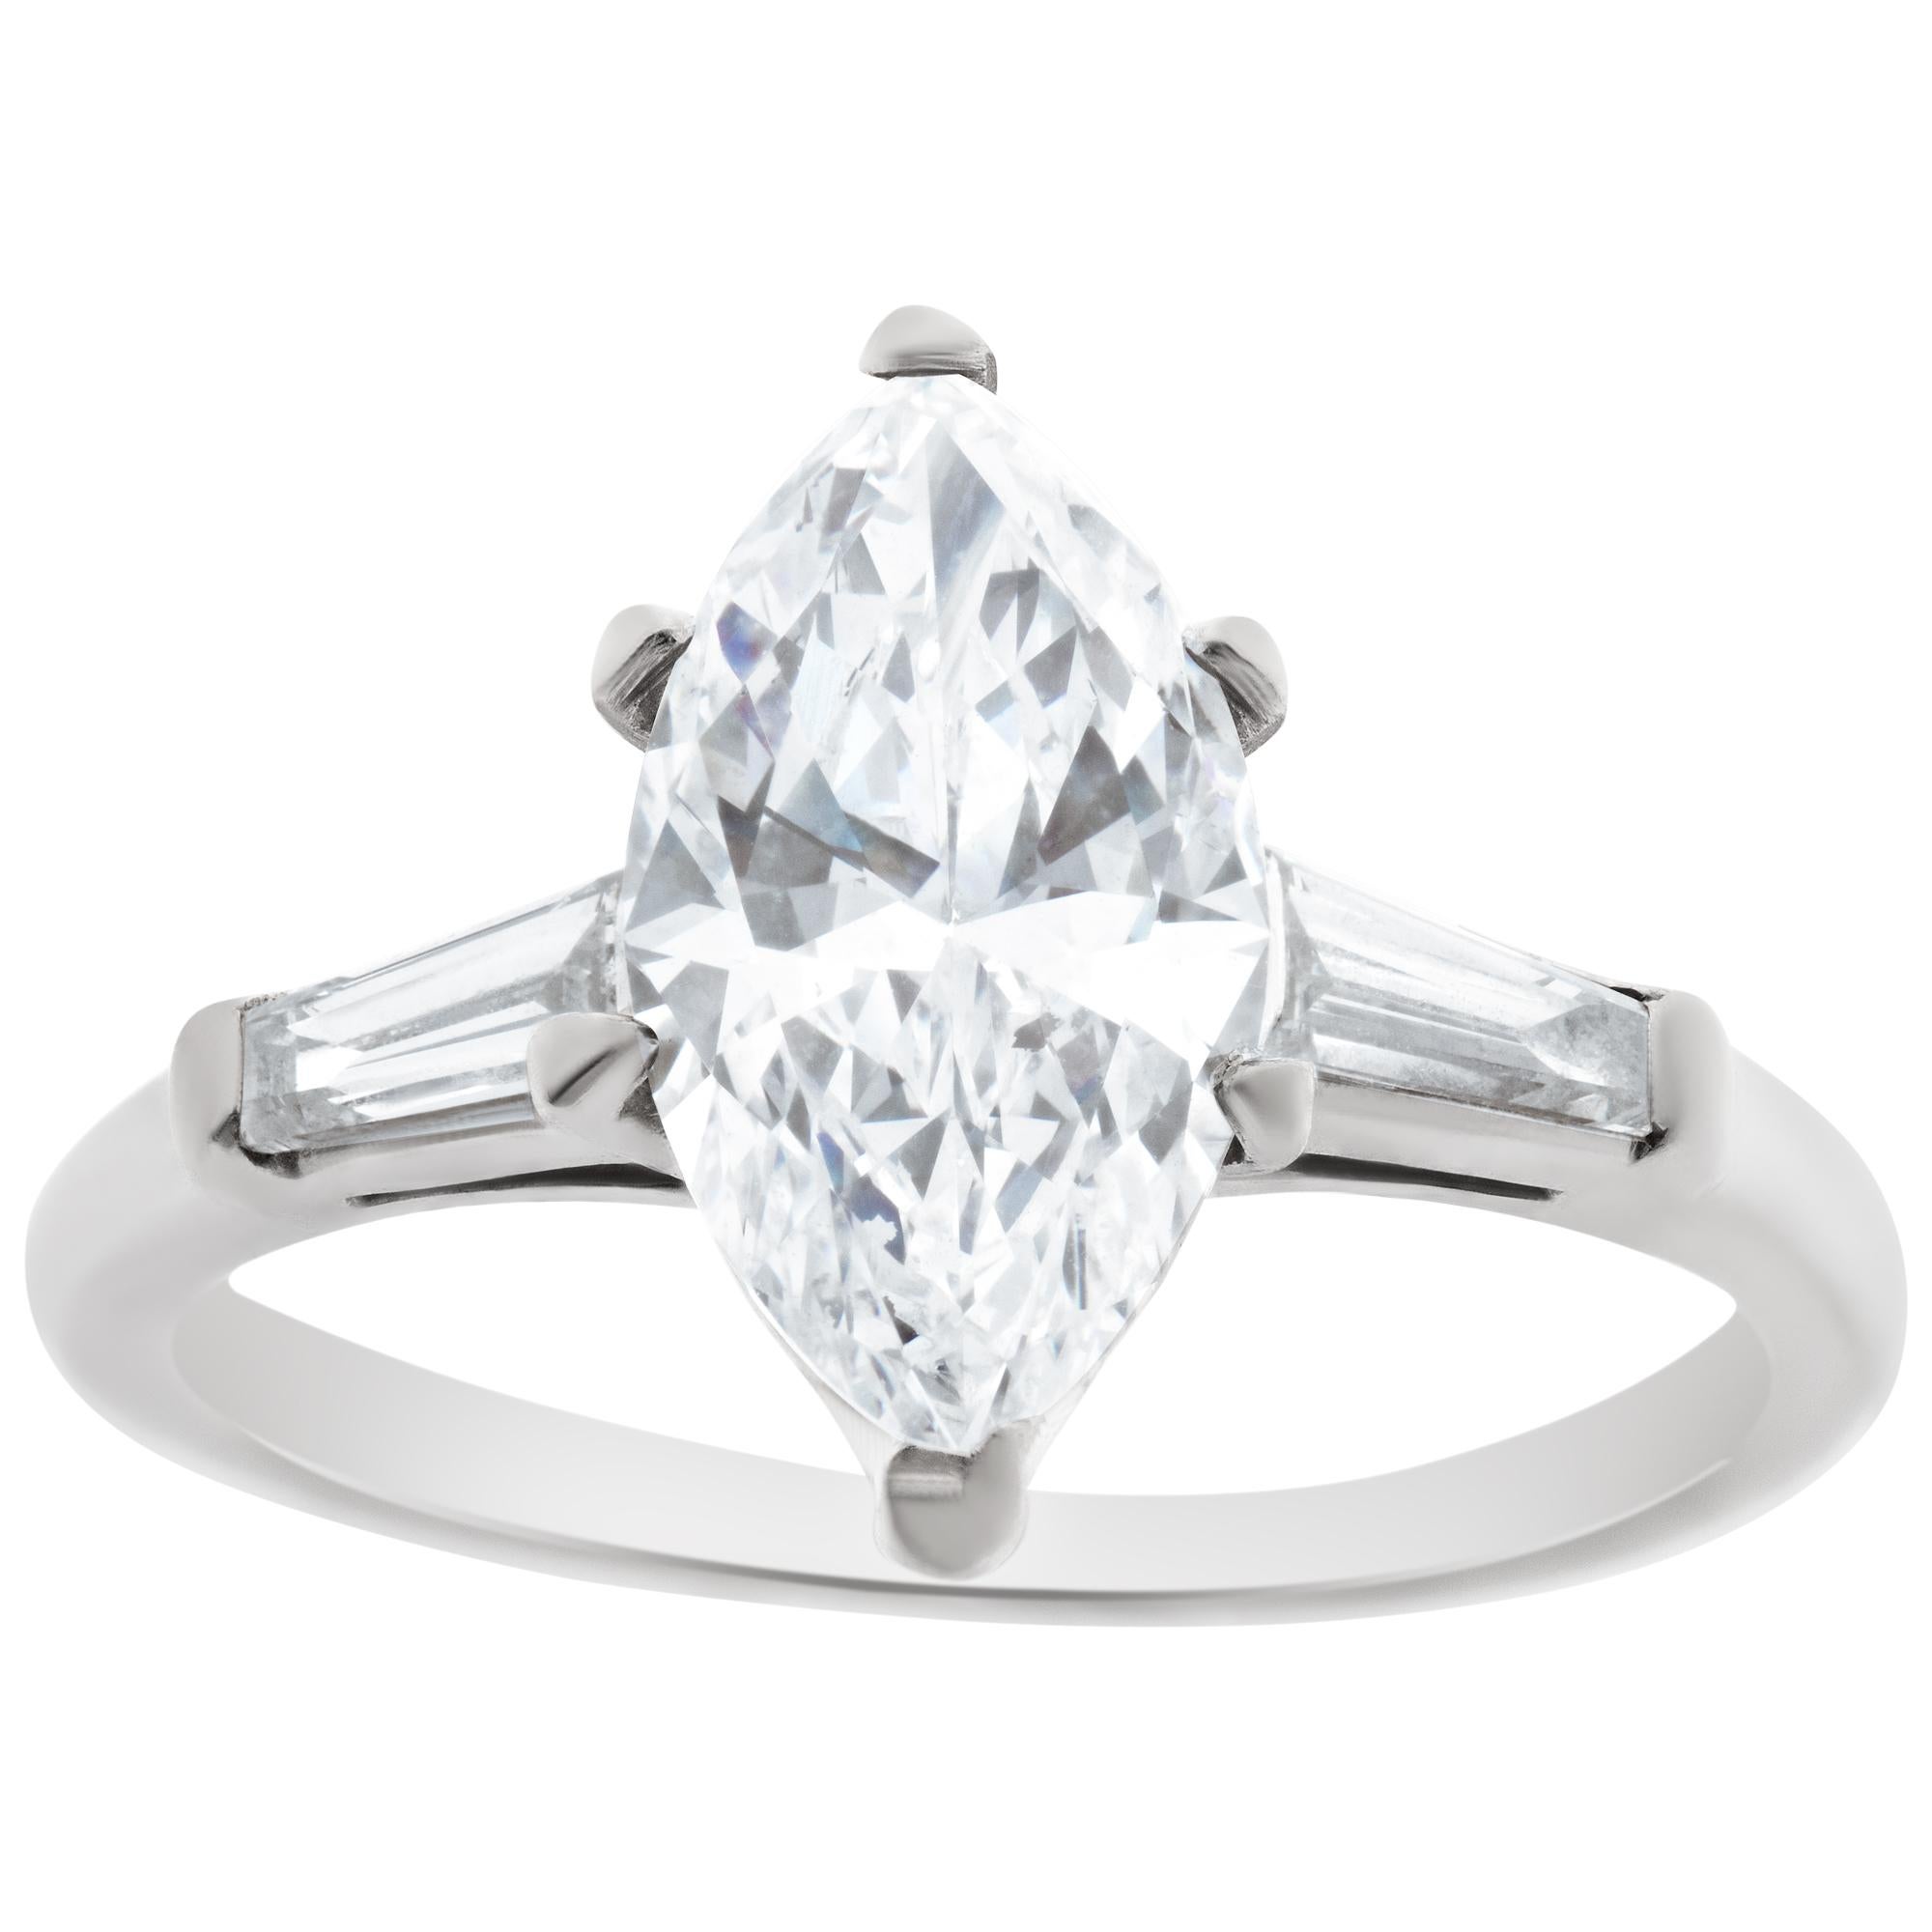 Women's GIA Certified Marquise Brilliant Cut 1.51 Carat Diamond